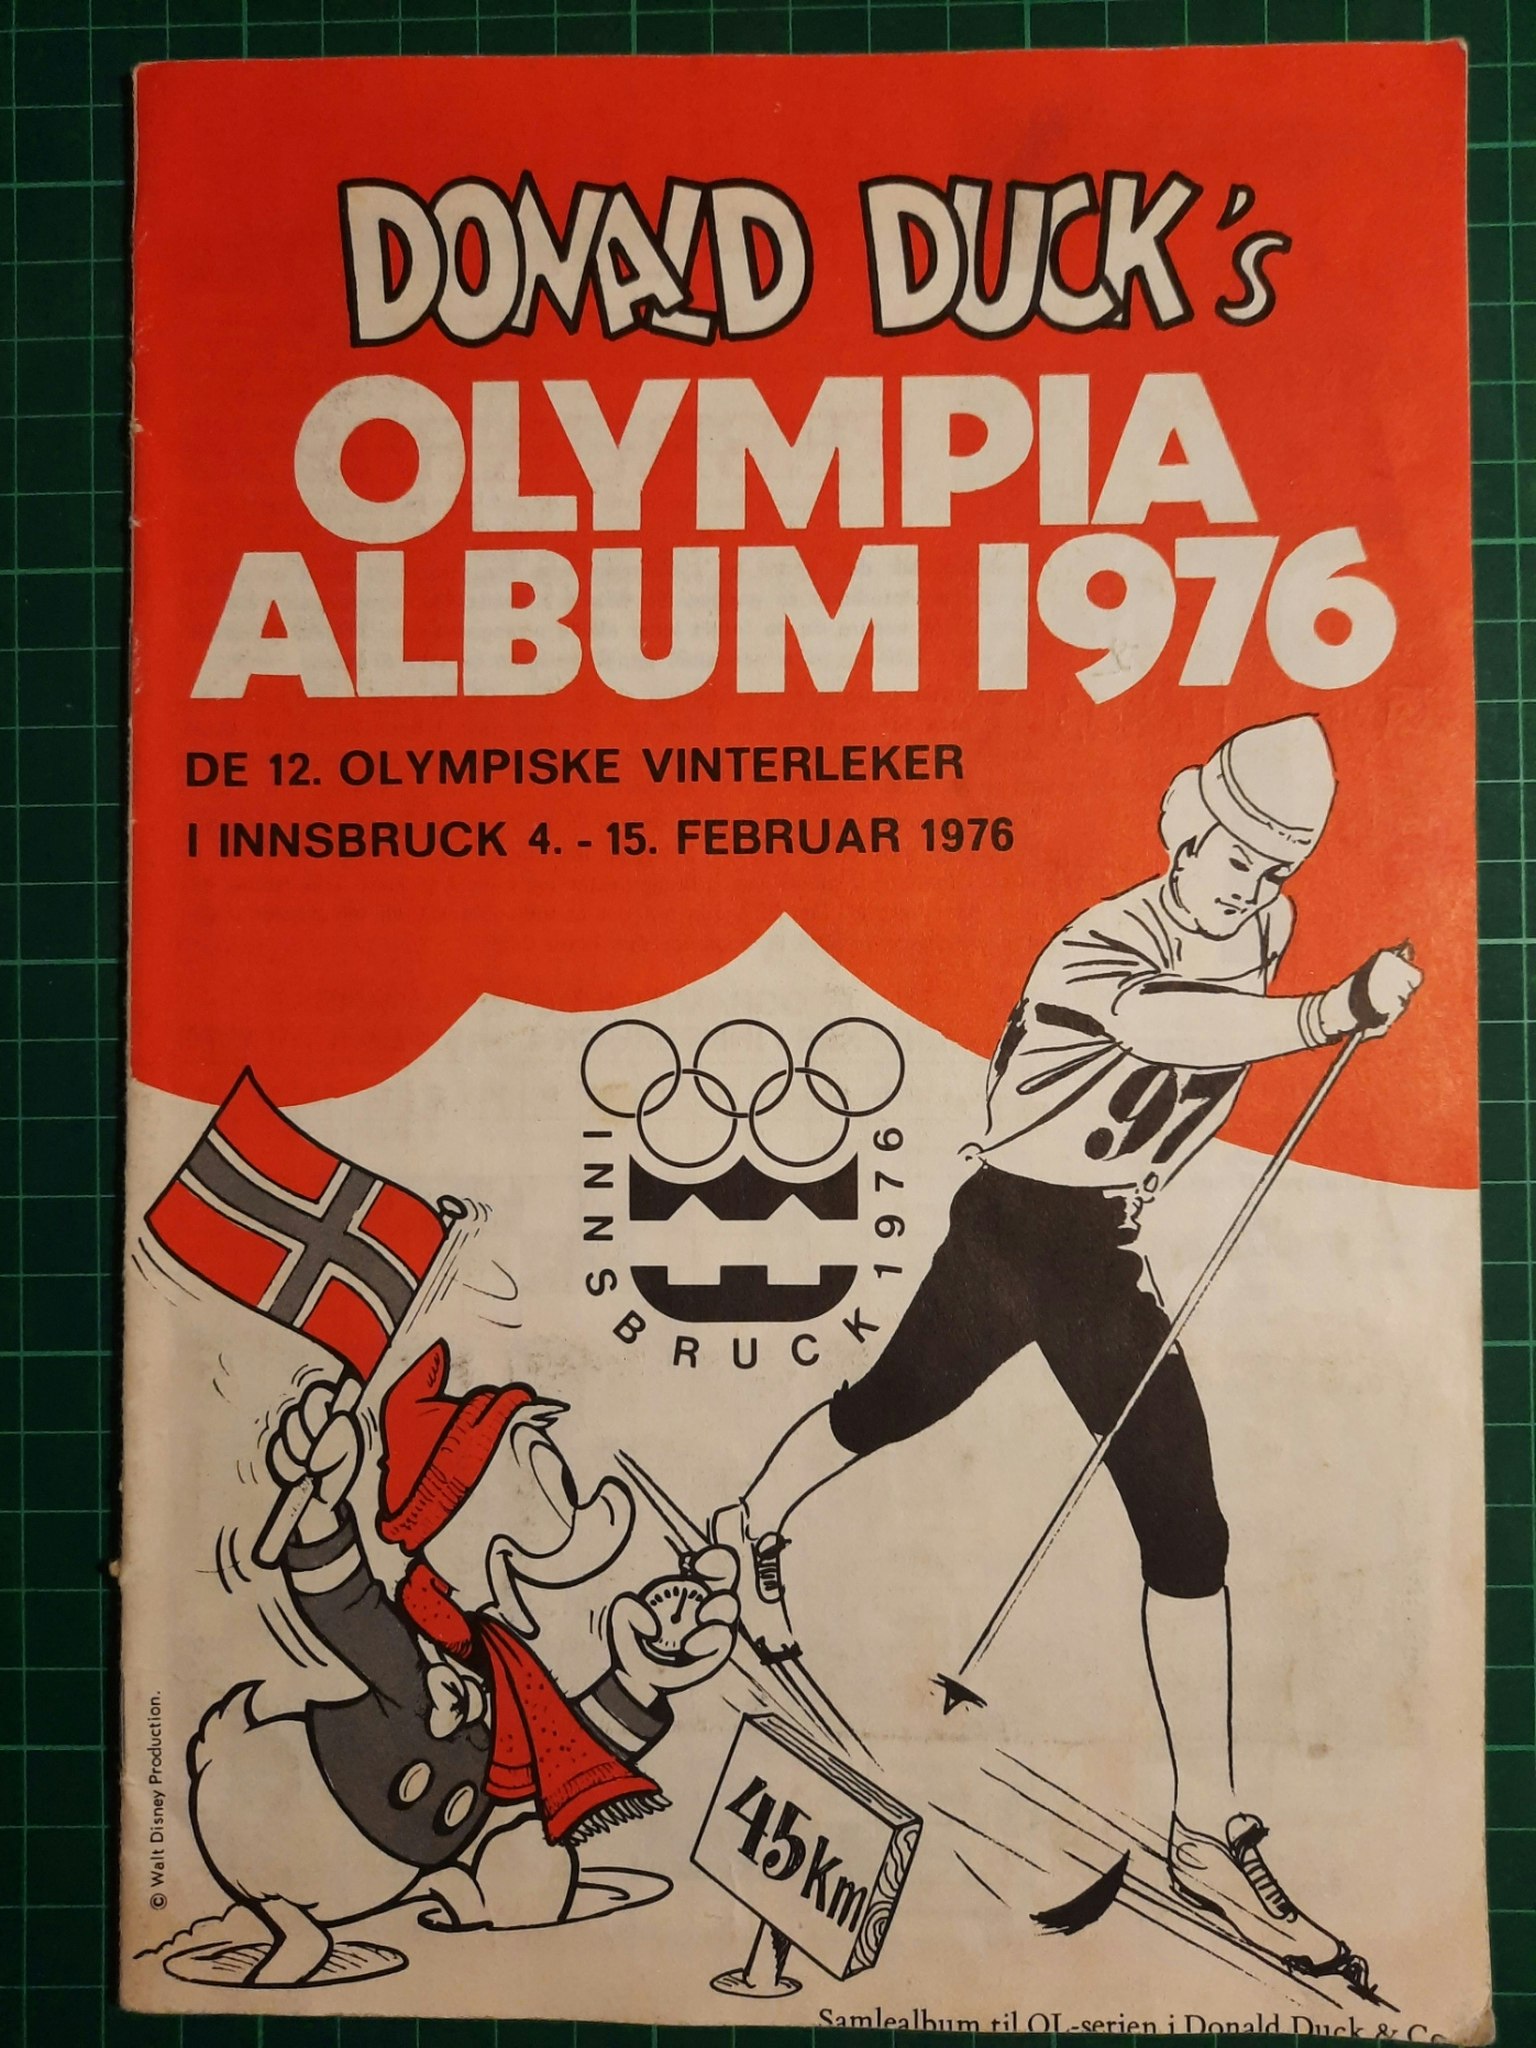 Donald Duck's Olympia album 1976